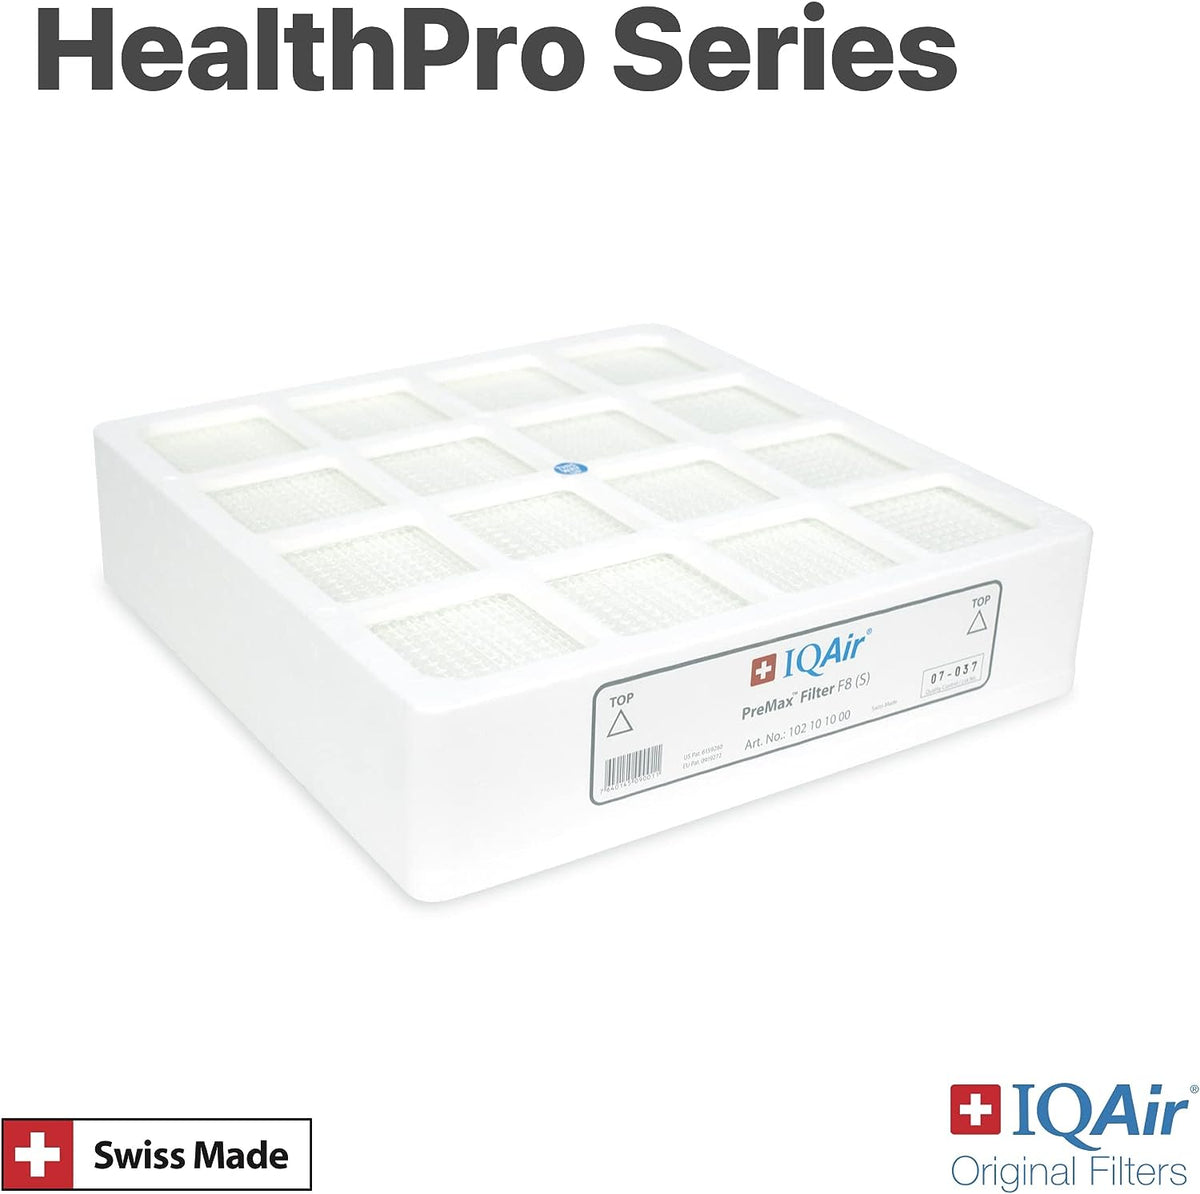 HealthPro Series filter Swiss made